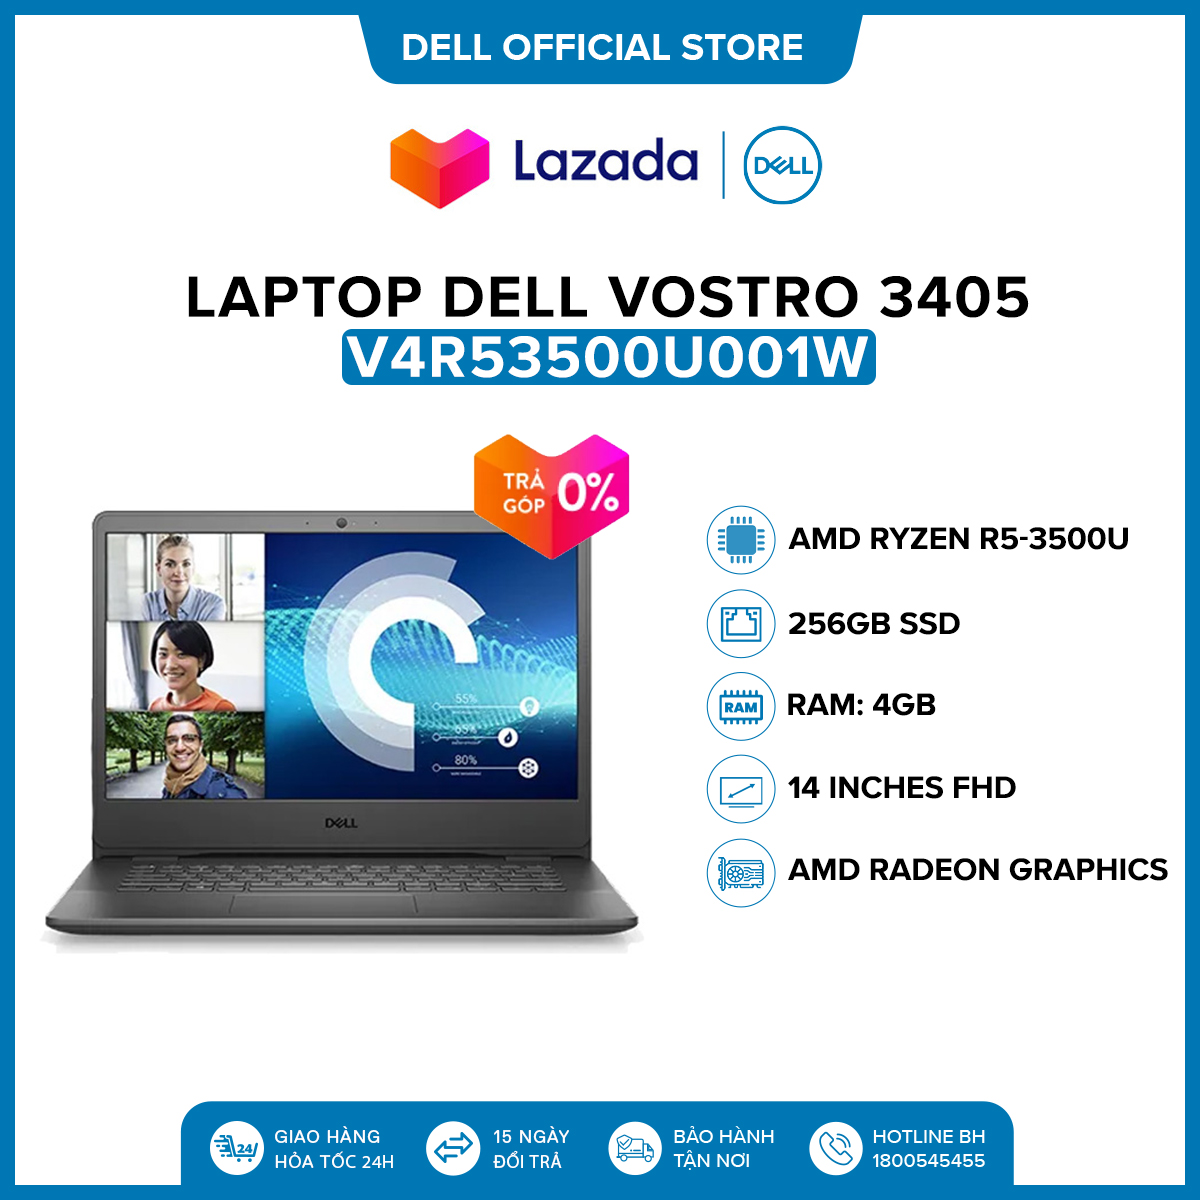 Laptop Dell Vostro 3405 14 inches FHD (AMD Ryzen R5-3500U / 4GB / 256GB SSD / AMD Radeon Graphics / Win 10 Home SL) l Black l V4R53500U001W